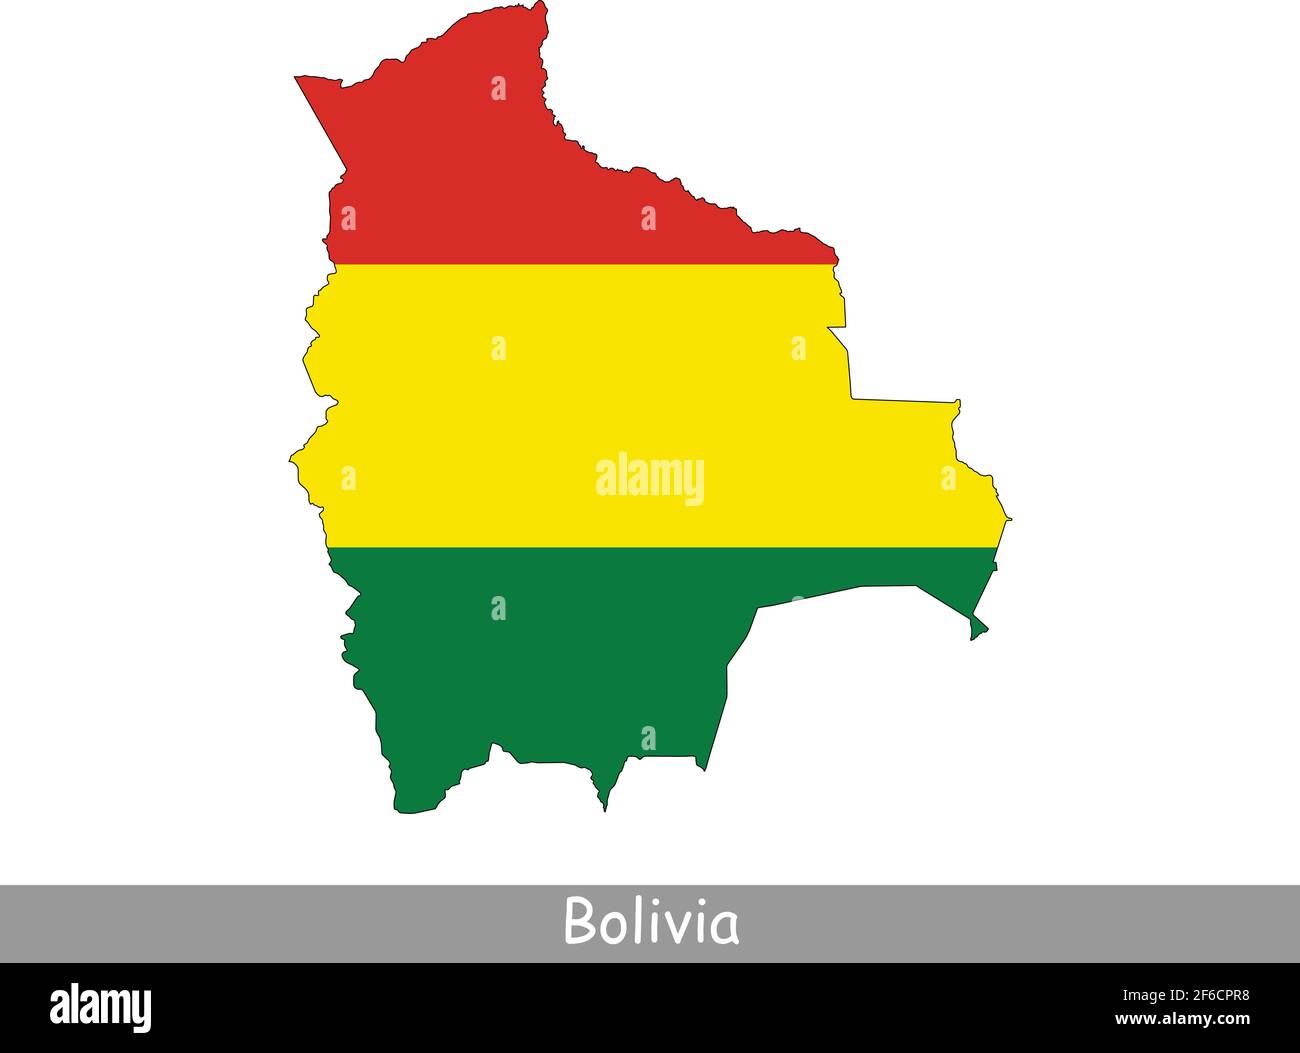 bolivia-map-flag-map-of-bolivia-with-the-bolivian-national-flag